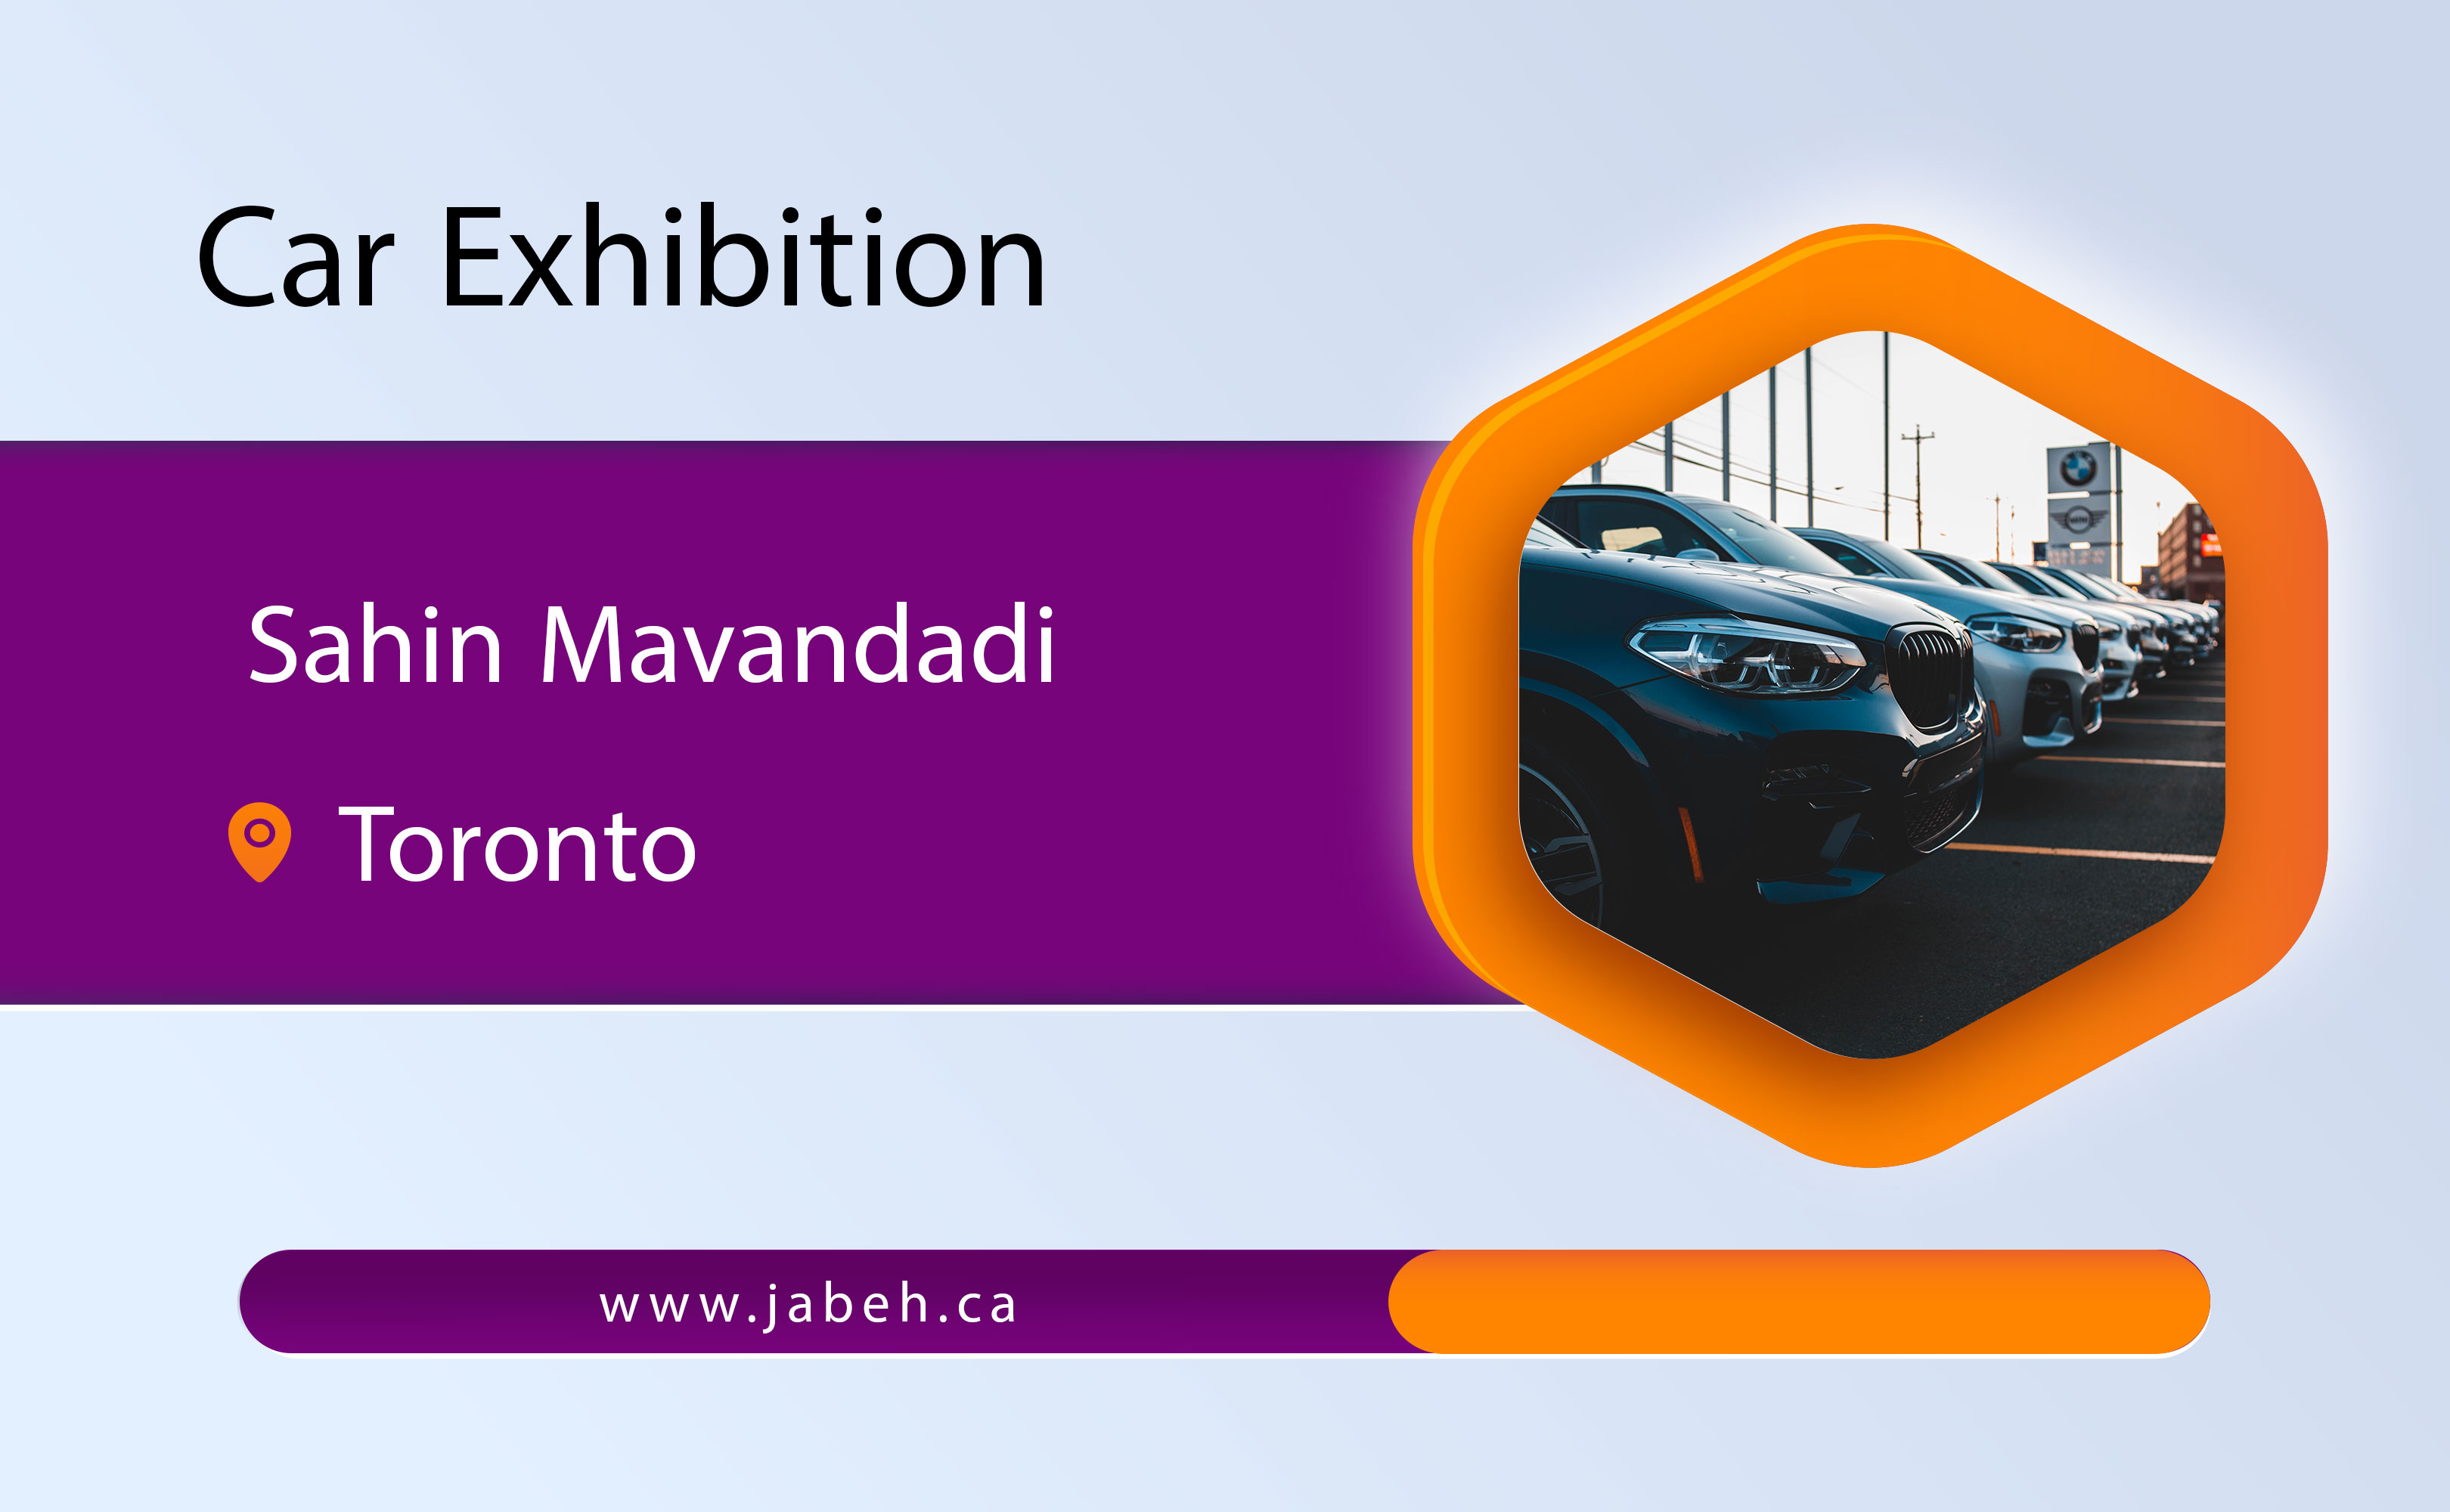 Sahin Mavandadi car exhibition in Toronto